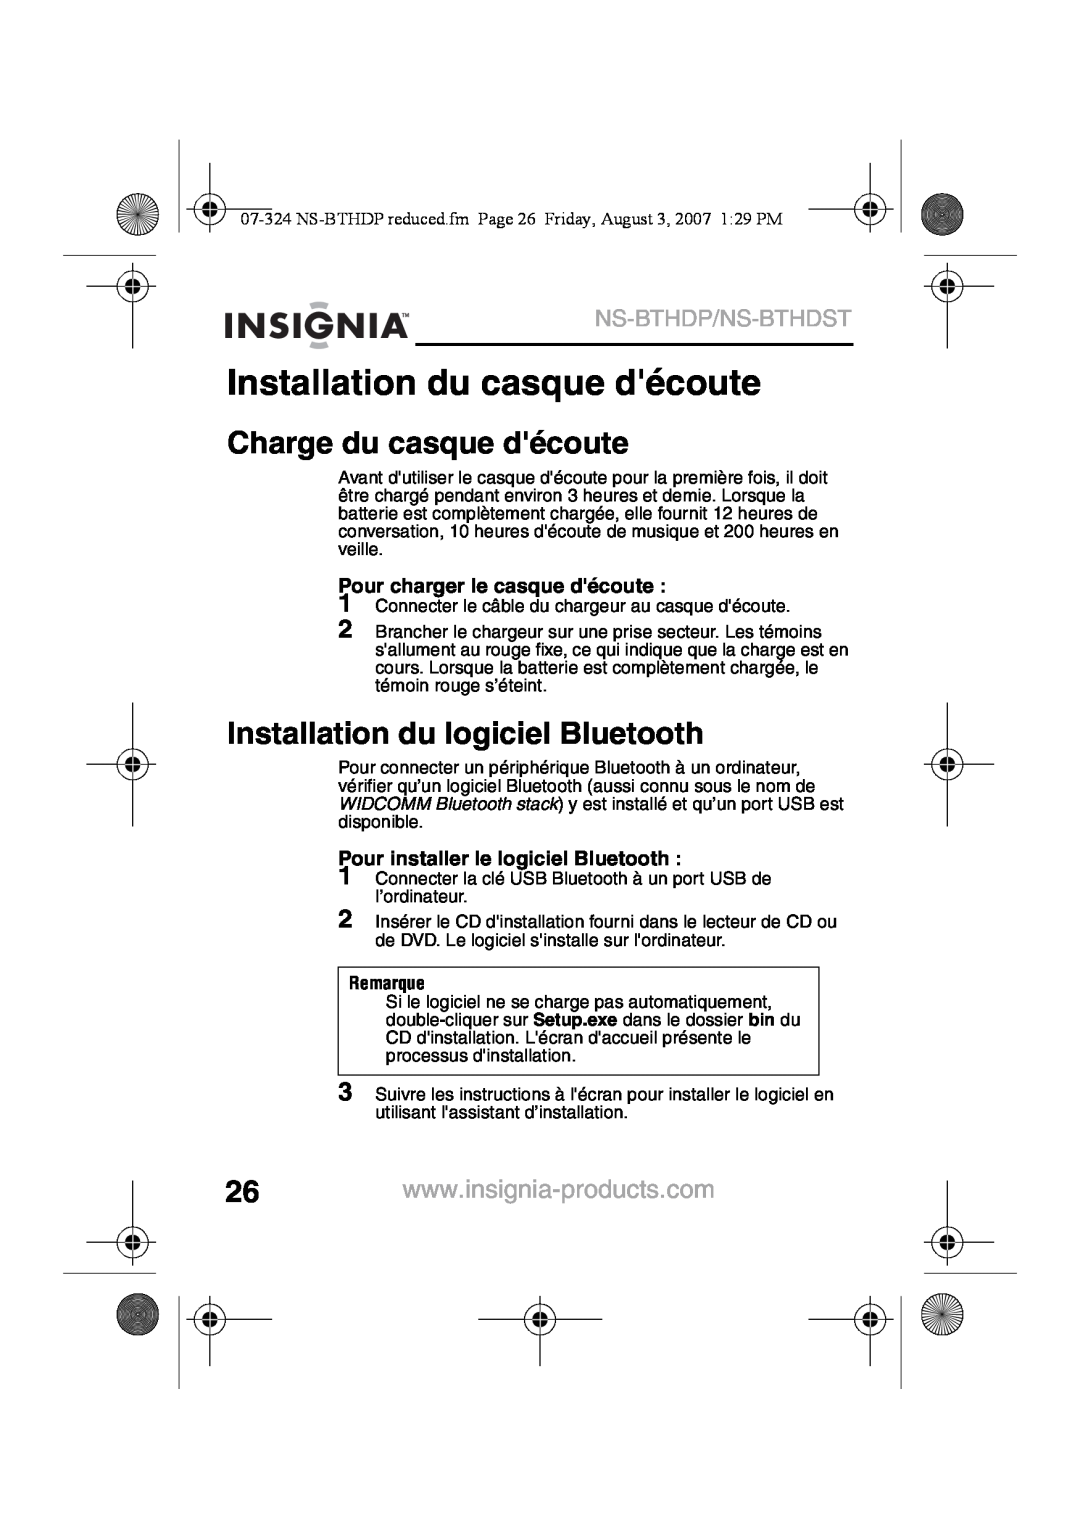 Insignia NS-BTHDST Installation du casque découte, Charge du casque découte, Installation du logiciel Bluetooth, Remarque 